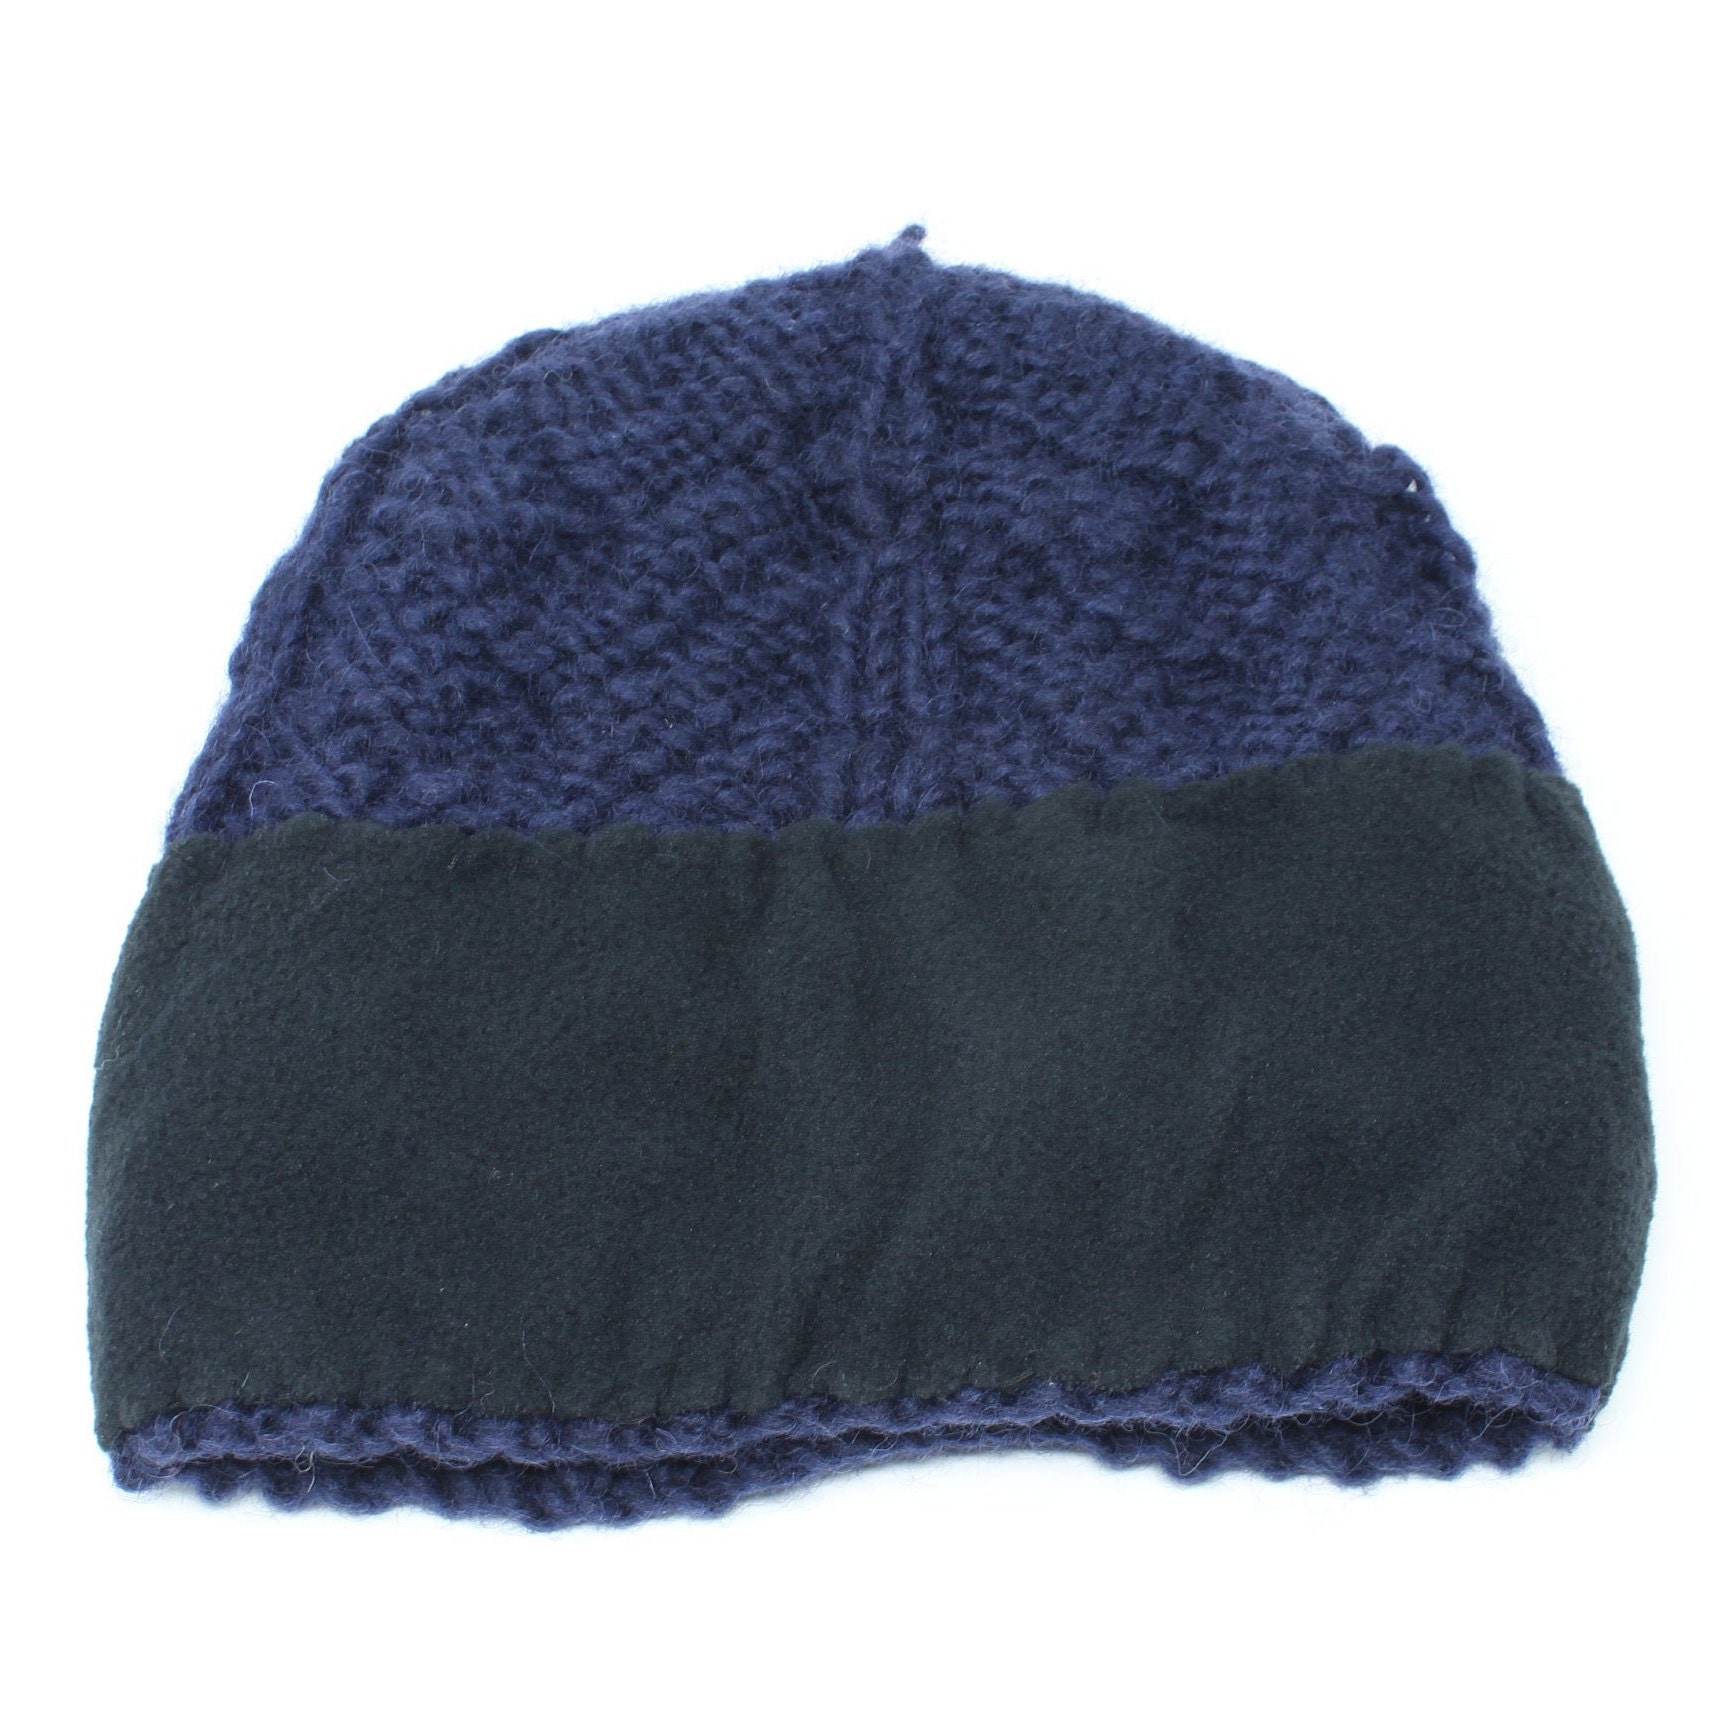 Knit Winter Hat | Hand Knitted Beanie | Blue Hats | Warm Winter Beanie ...